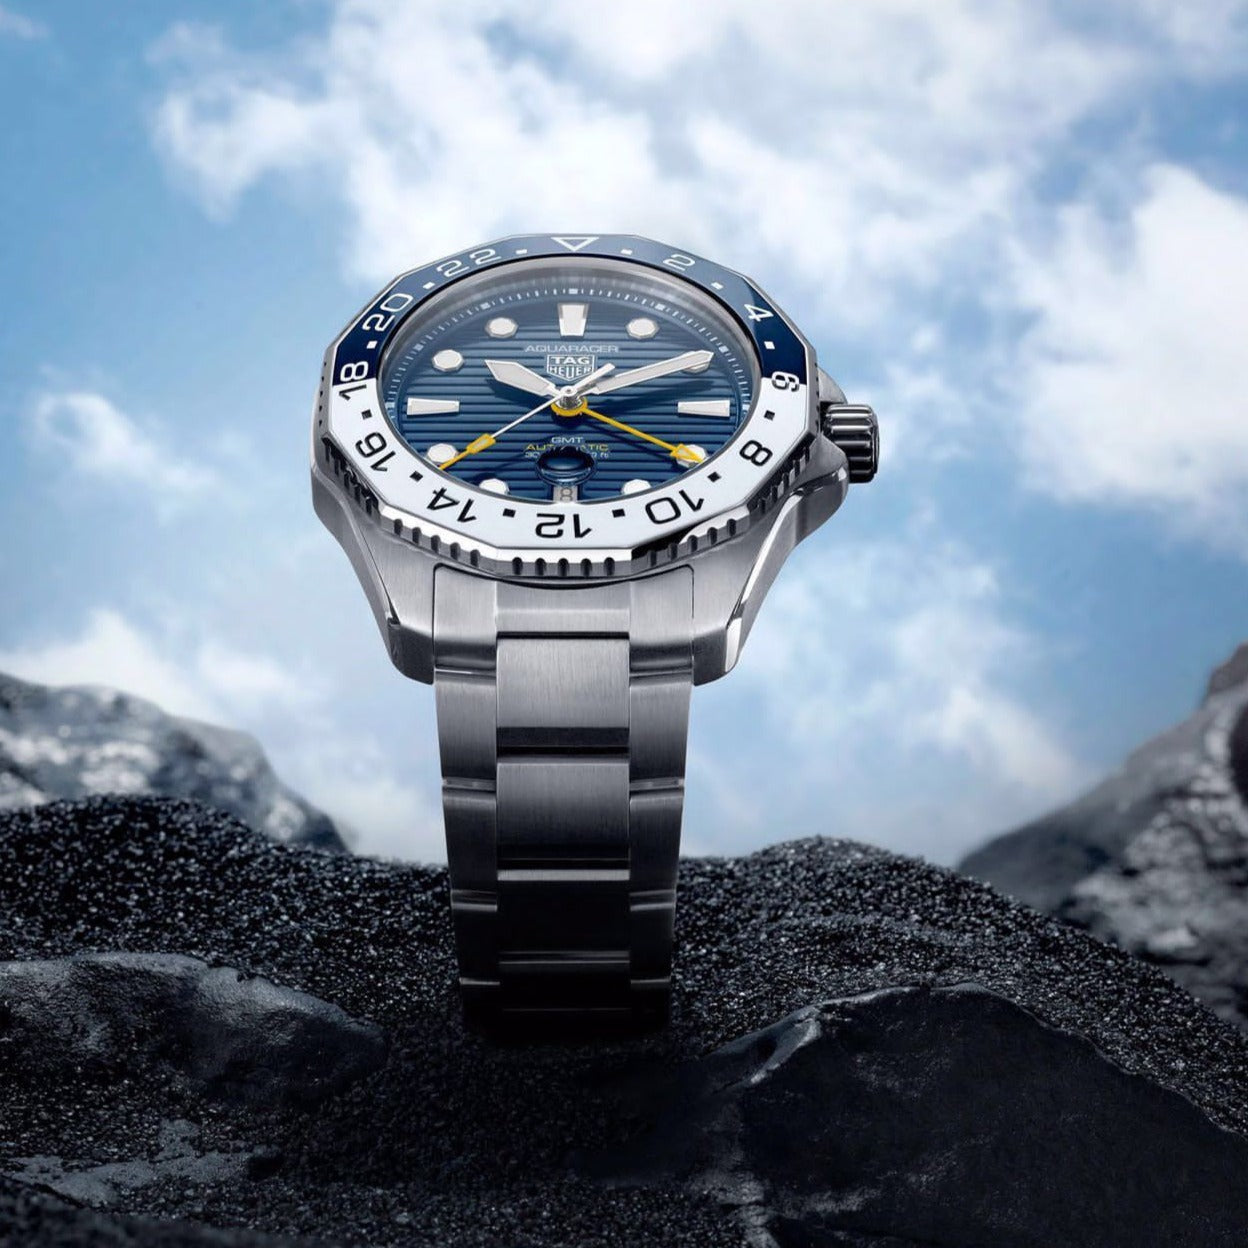 Aquaracer Professional 300 GMT Calibre watch - AmazingBaba